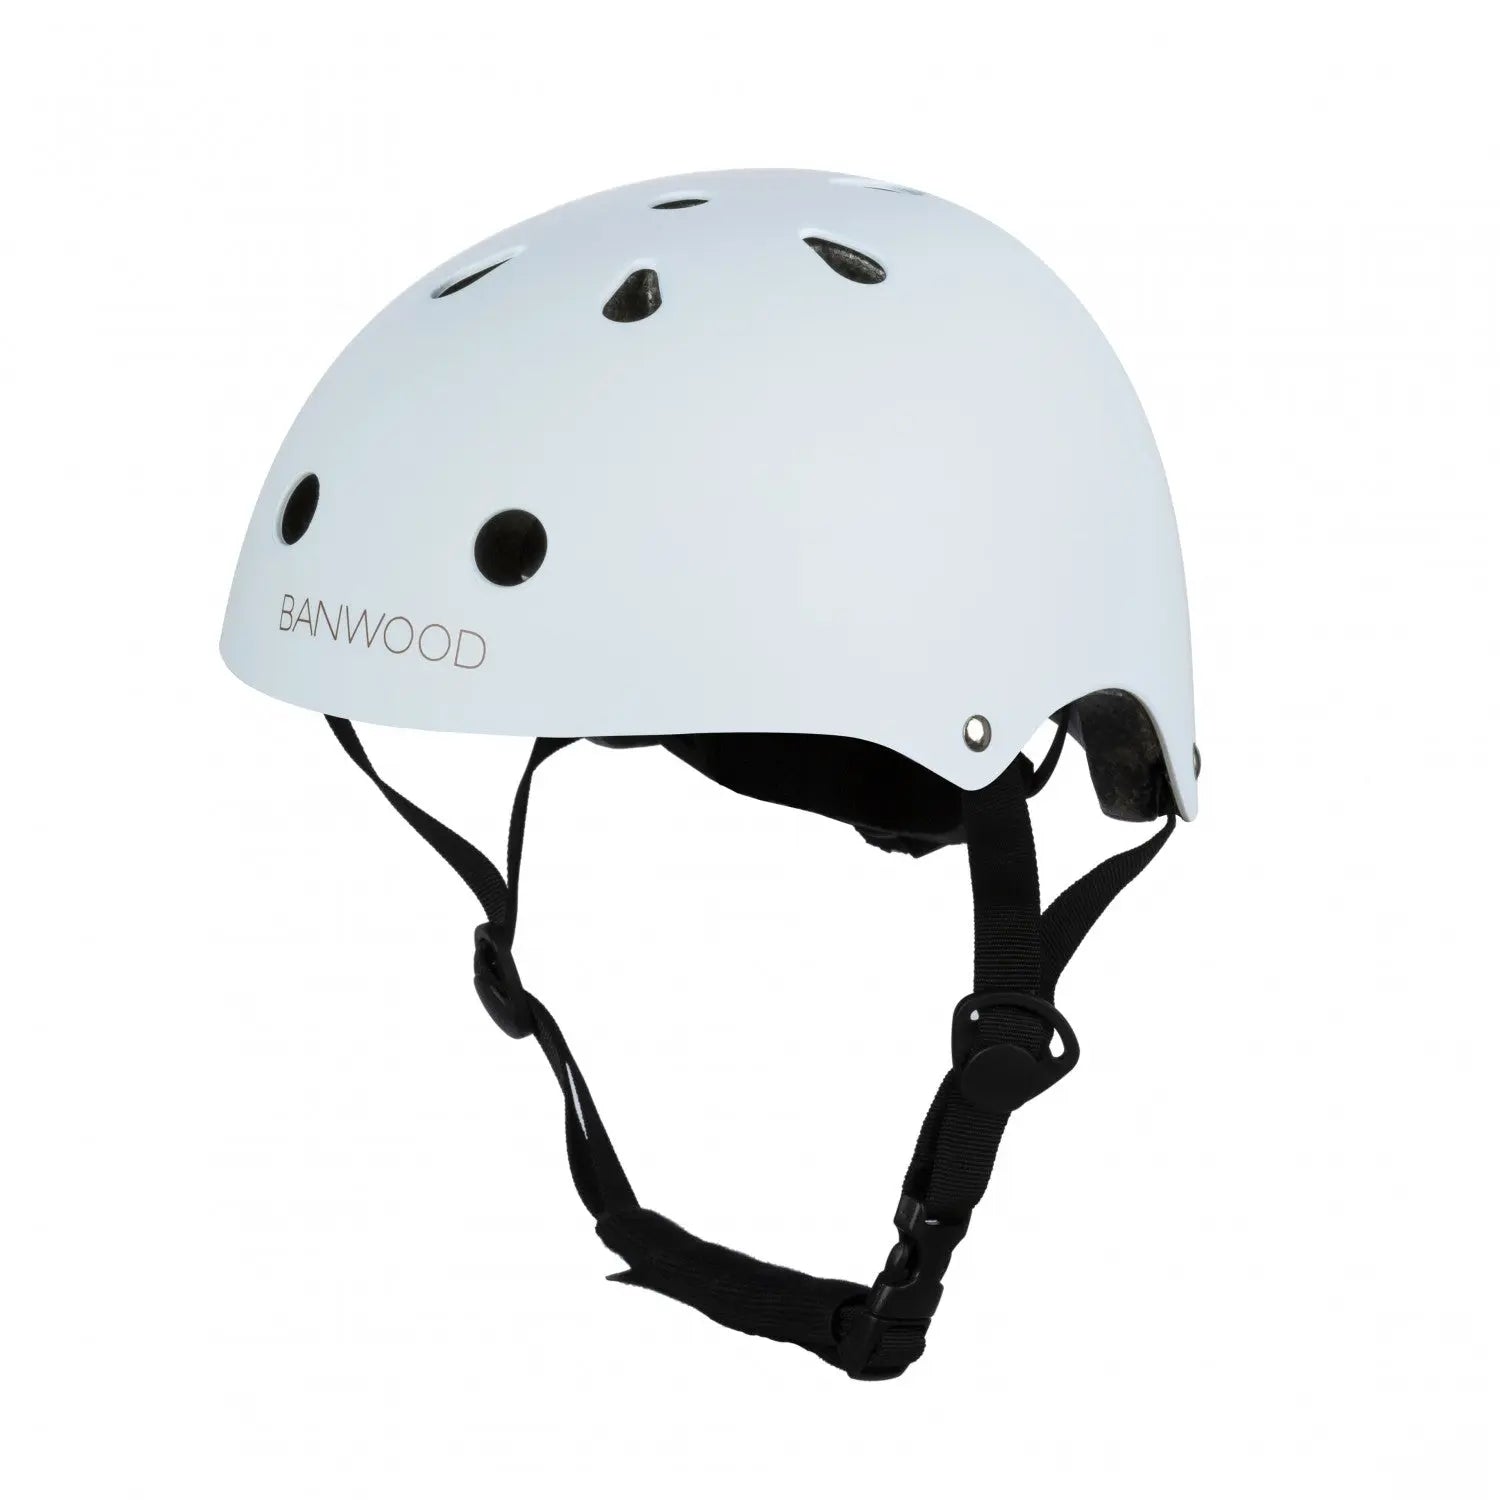 Classic Bicycle Helmet for Kids, Sky Lightweight Helmet, Bike Safety Gear  Banwood   